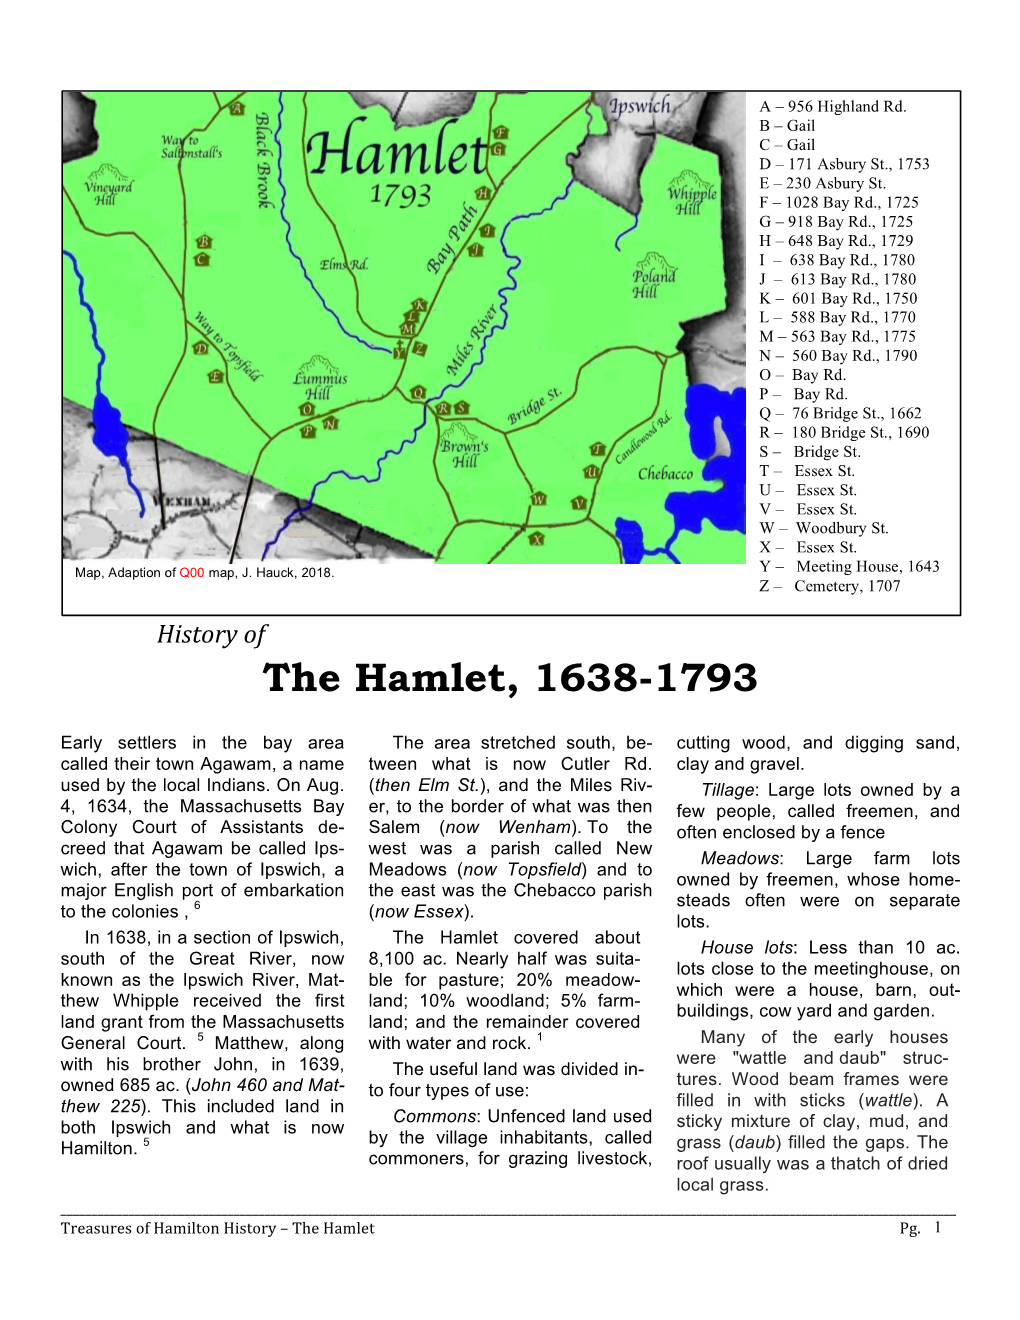 The Hamlet, 1638-1793